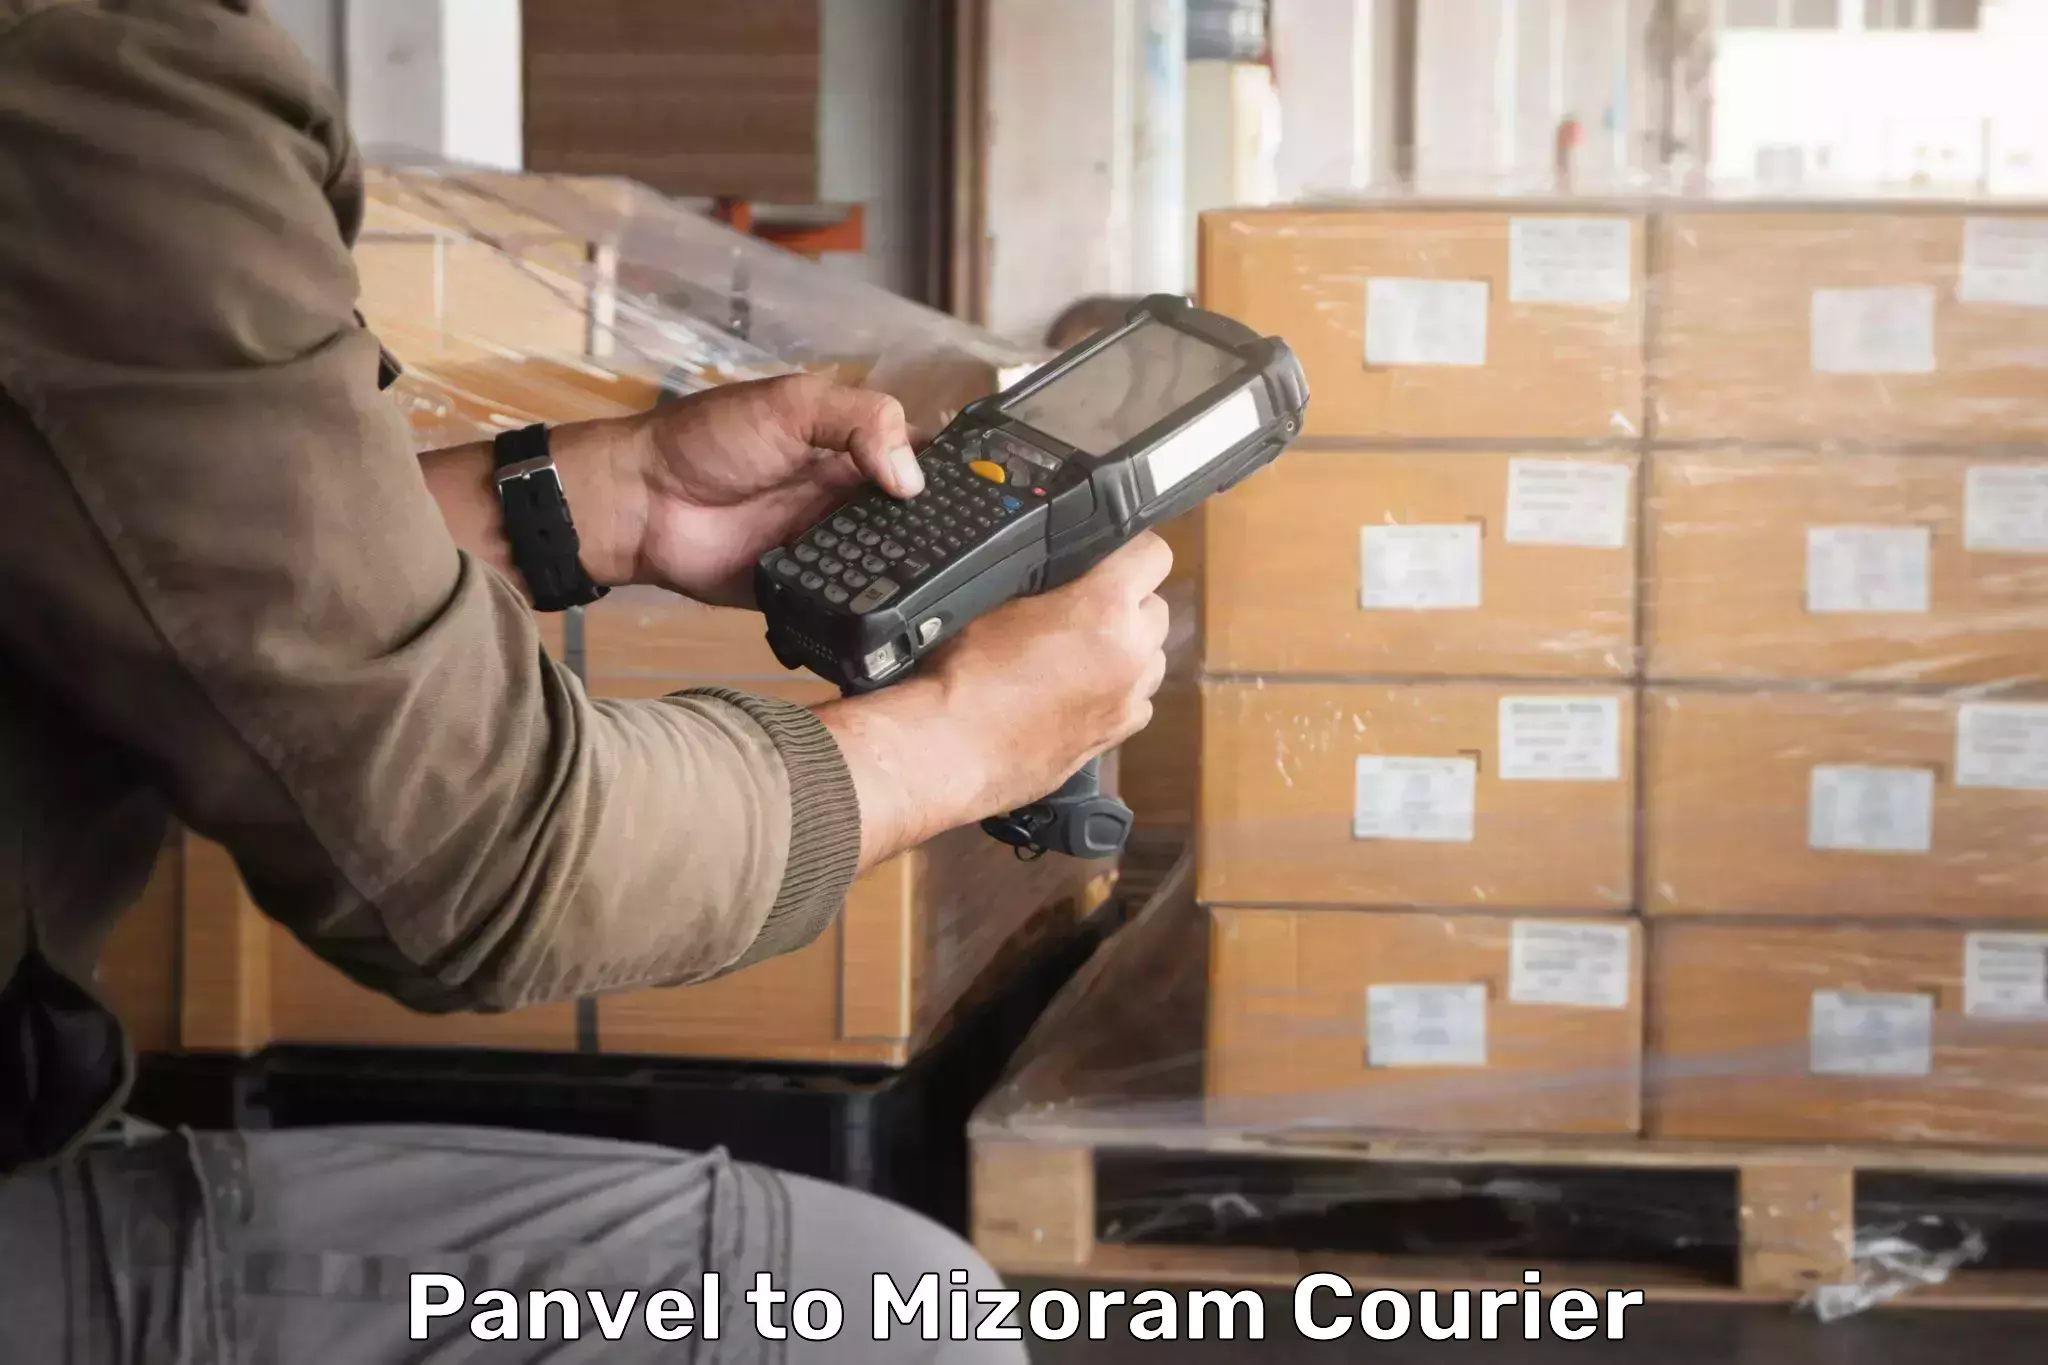 Digital courier platforms Panvel to Mizoram